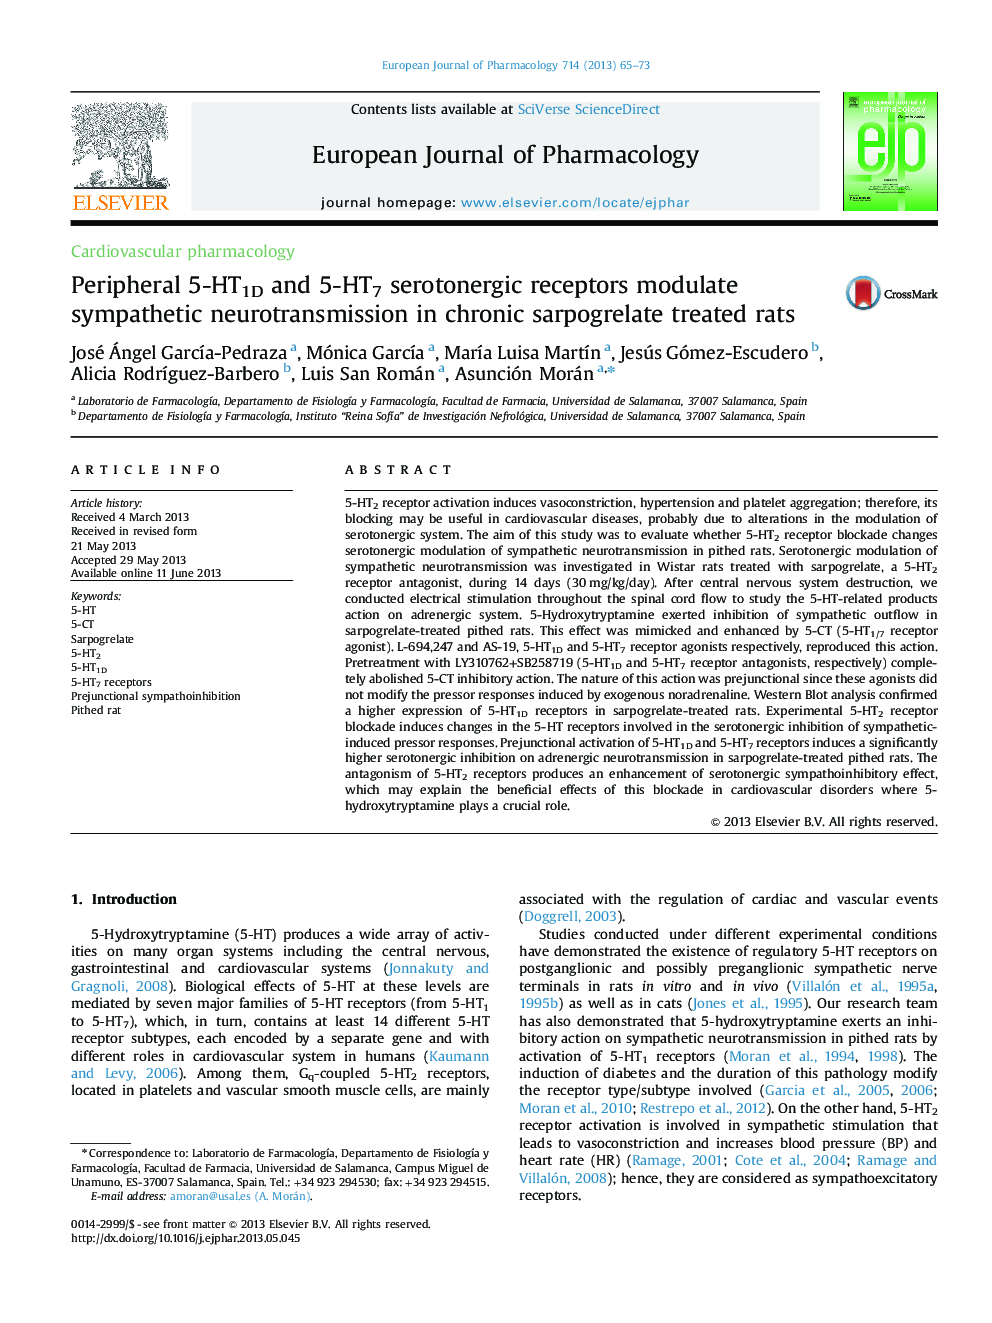 Peripheral 5-HT1D and 5-HT7 serotonergic receptors modulate sympathetic neurotransmission in chronic sarpogrelate treated rats